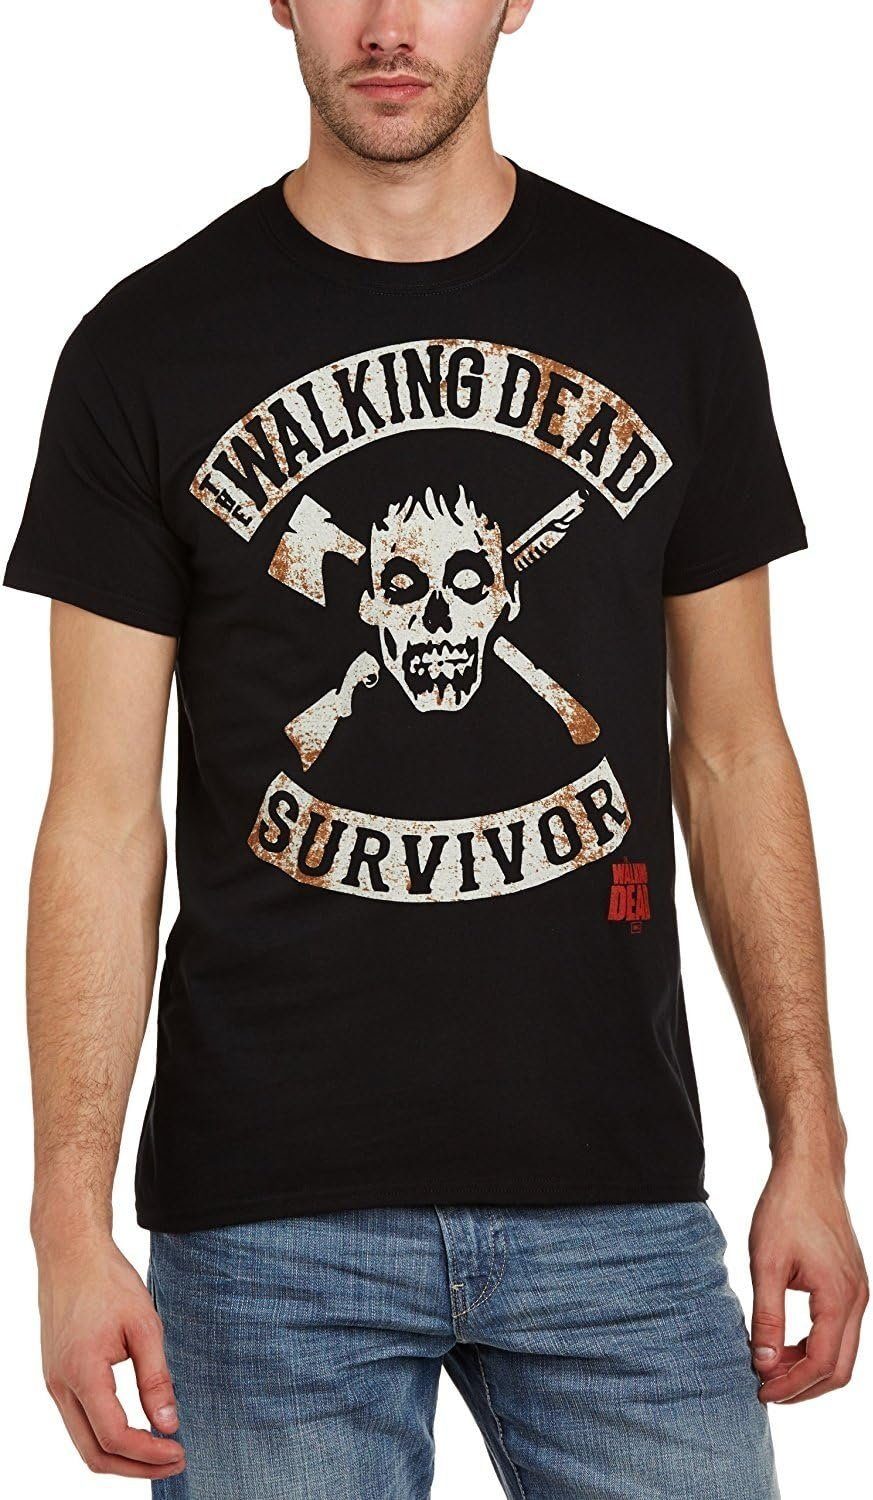 The Walking Dead Print-Shirt The Walking Dead T-Shirt Survivoir Black S XL The Wakling Dead Staffel